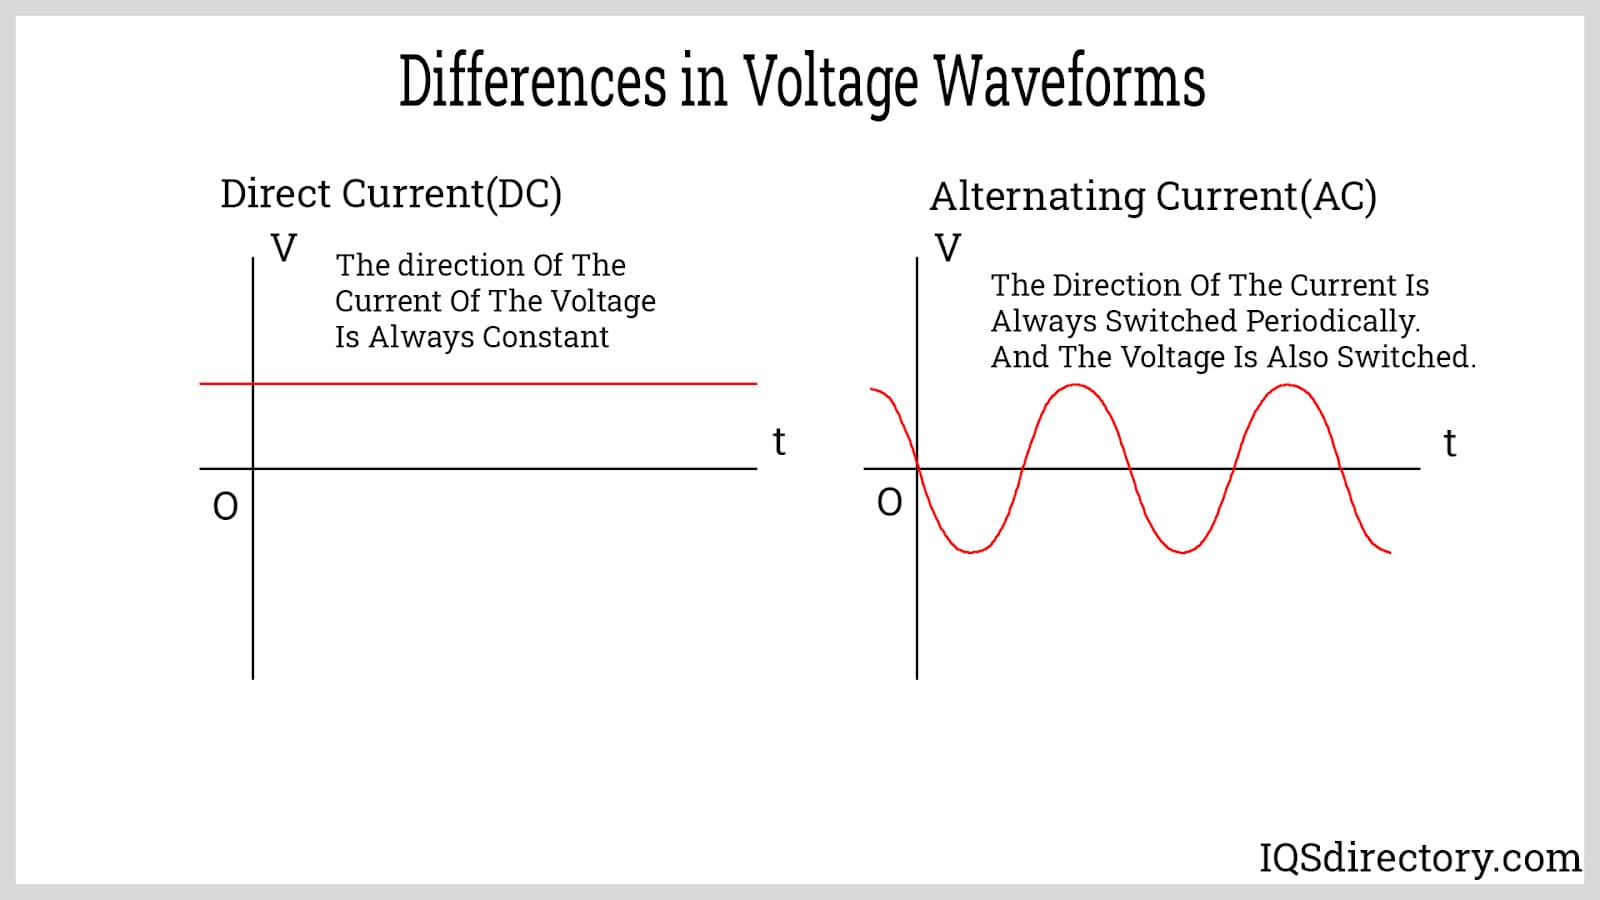 Differrences in Voltage Waveforms